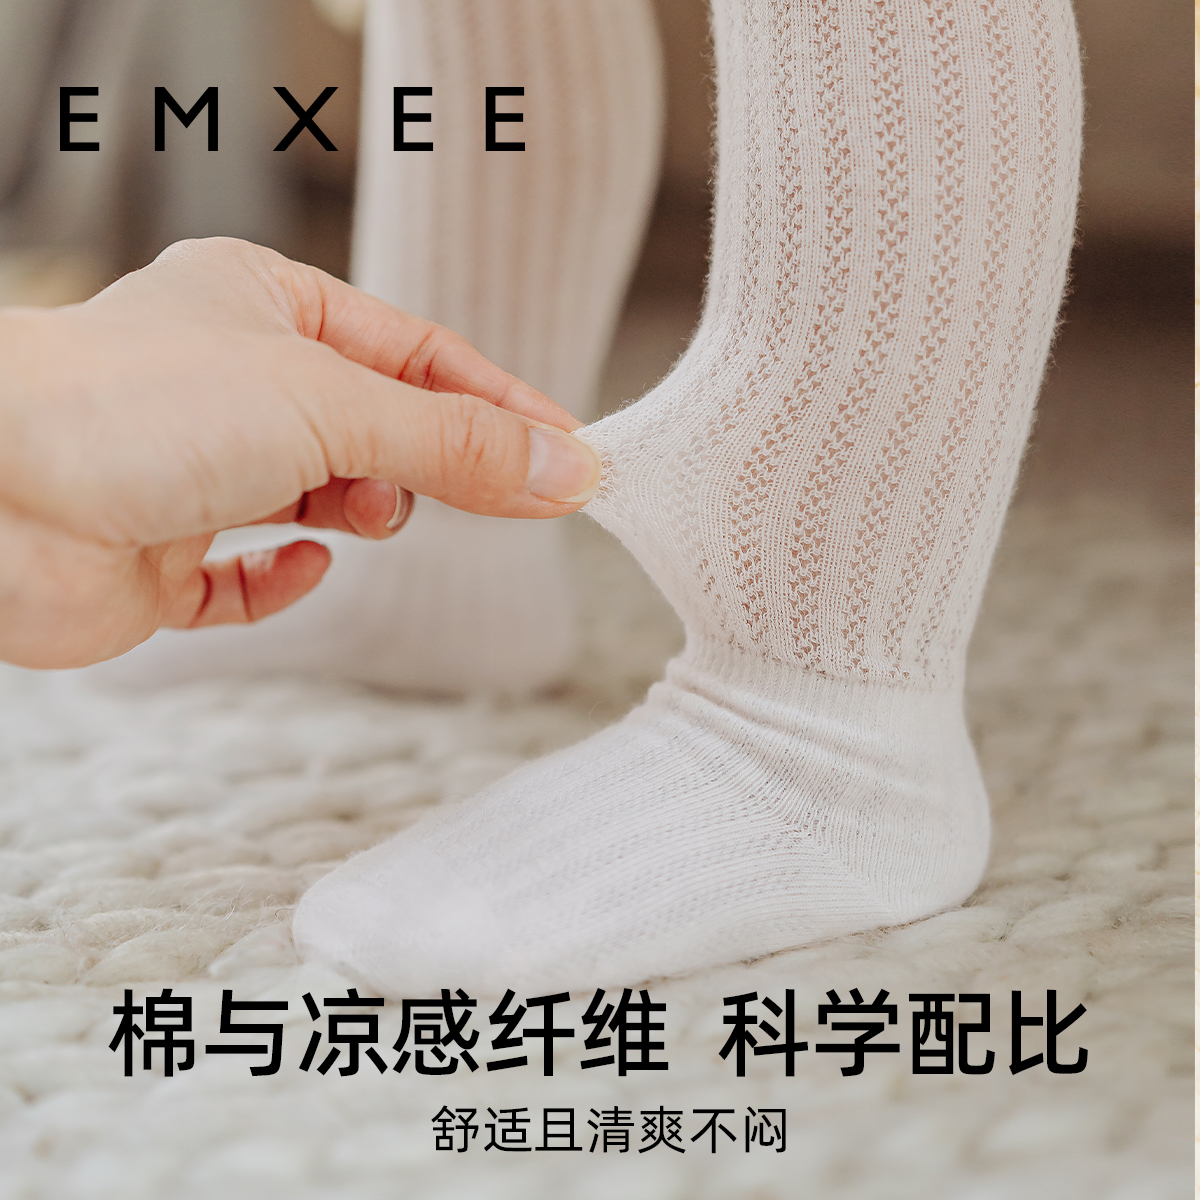 EMXEE 嫚熙 婴儿袜子 防蚊凉感透气 56.91元